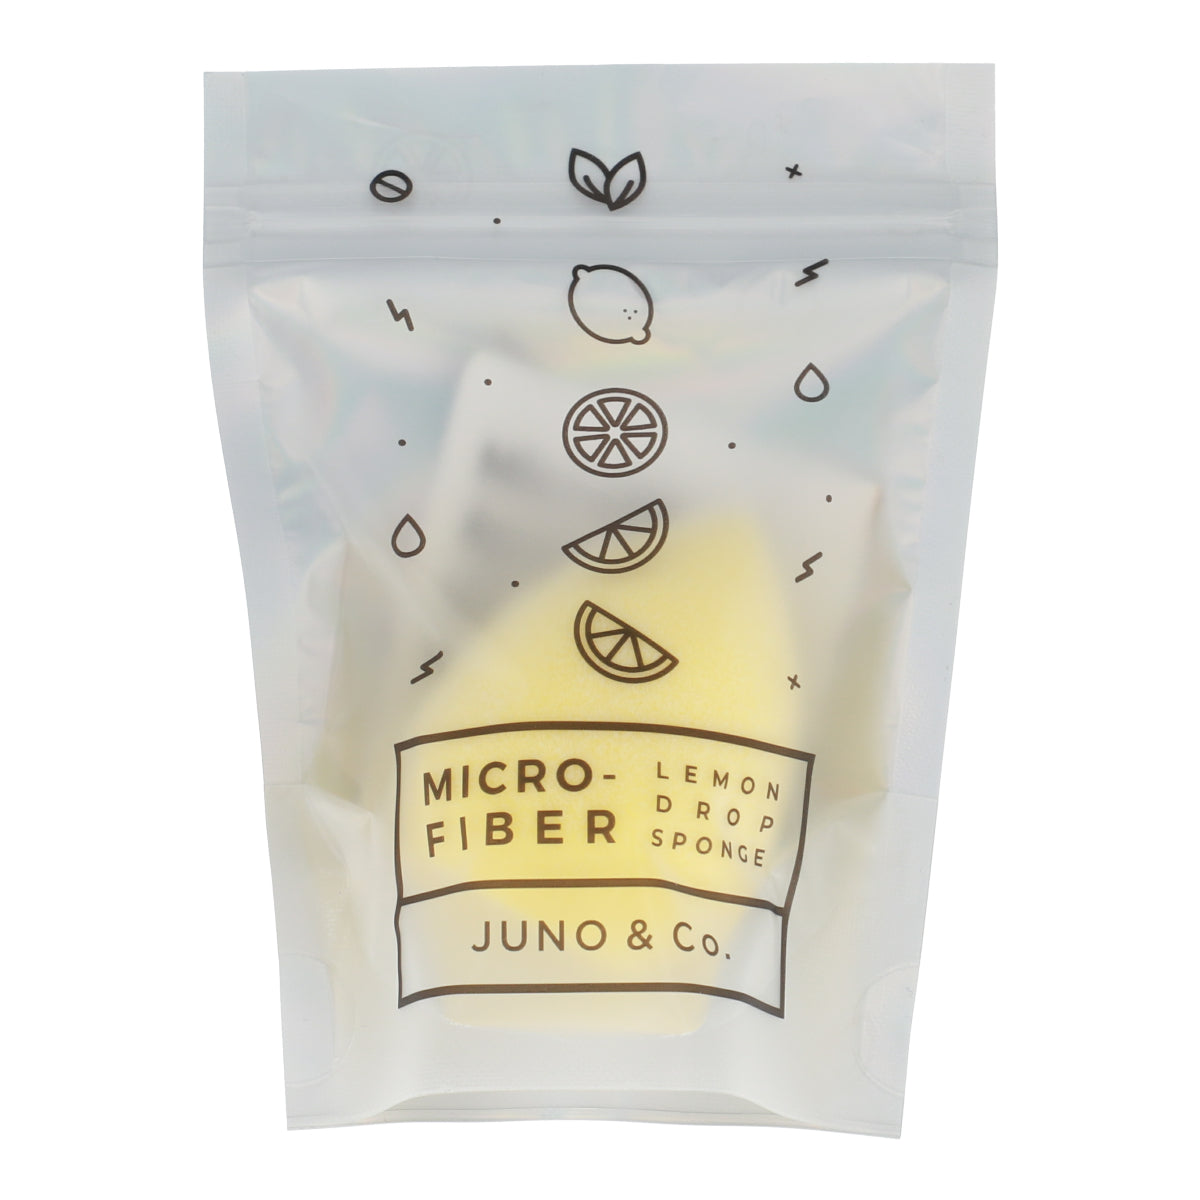 Microfiber Lemon Drop Sponge Juno